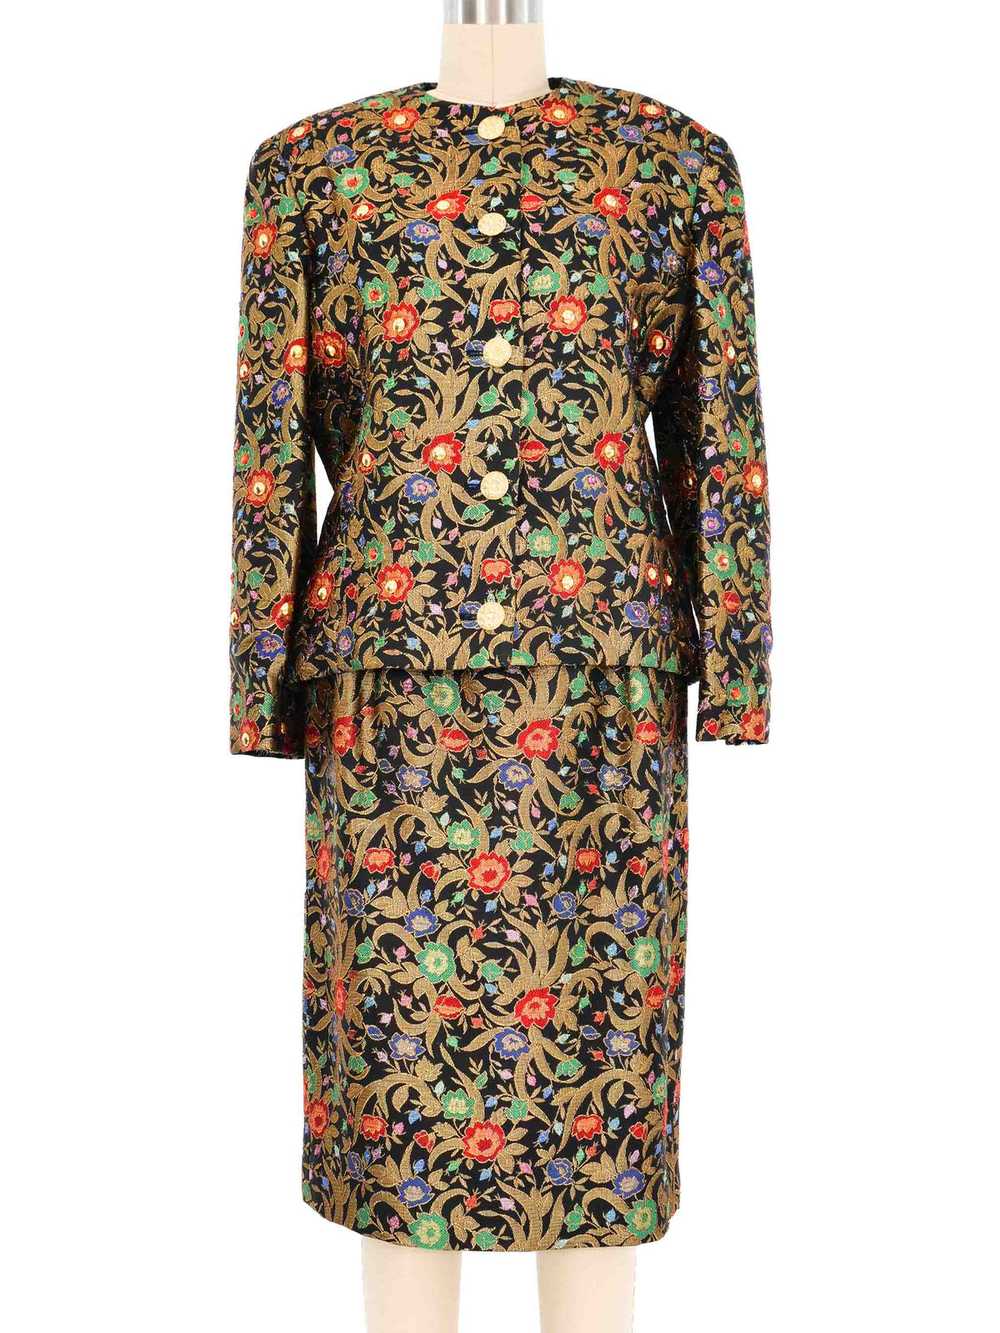 Adele Simpson Jewel Toned Brocade Suit - image 1